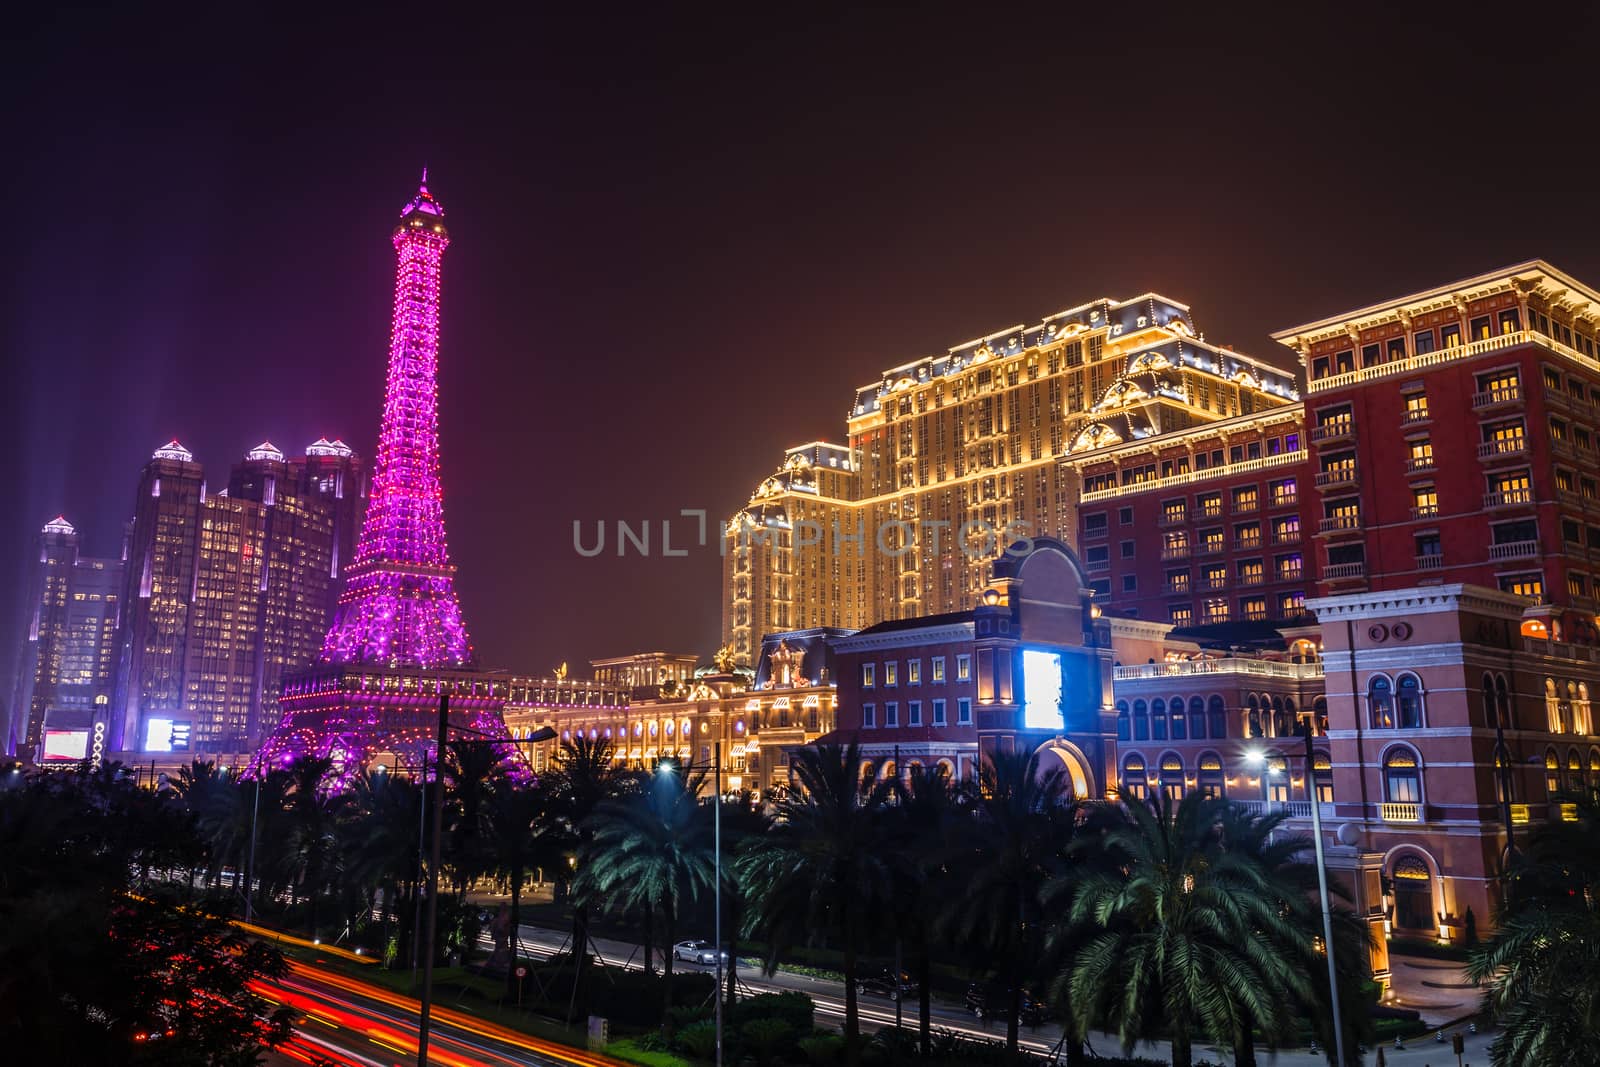 Street with palms full of neon lights of Macau skyscrapers and luxury casinos, Macau